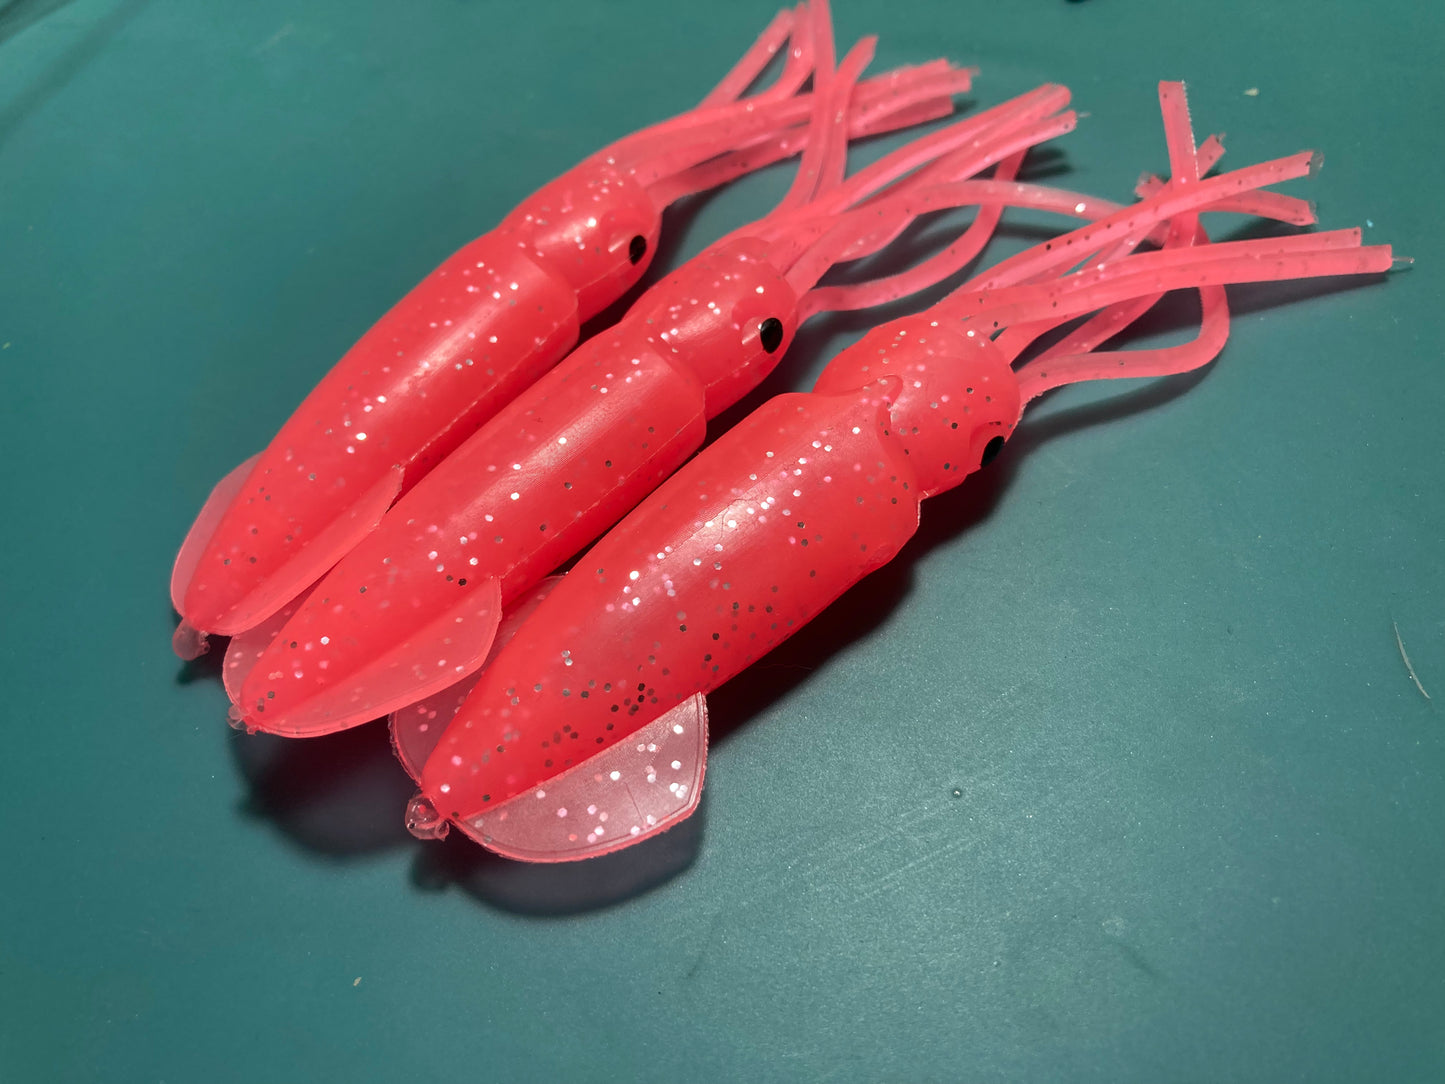 5” Squid Bait Packs - with 9/0 long shank hooks